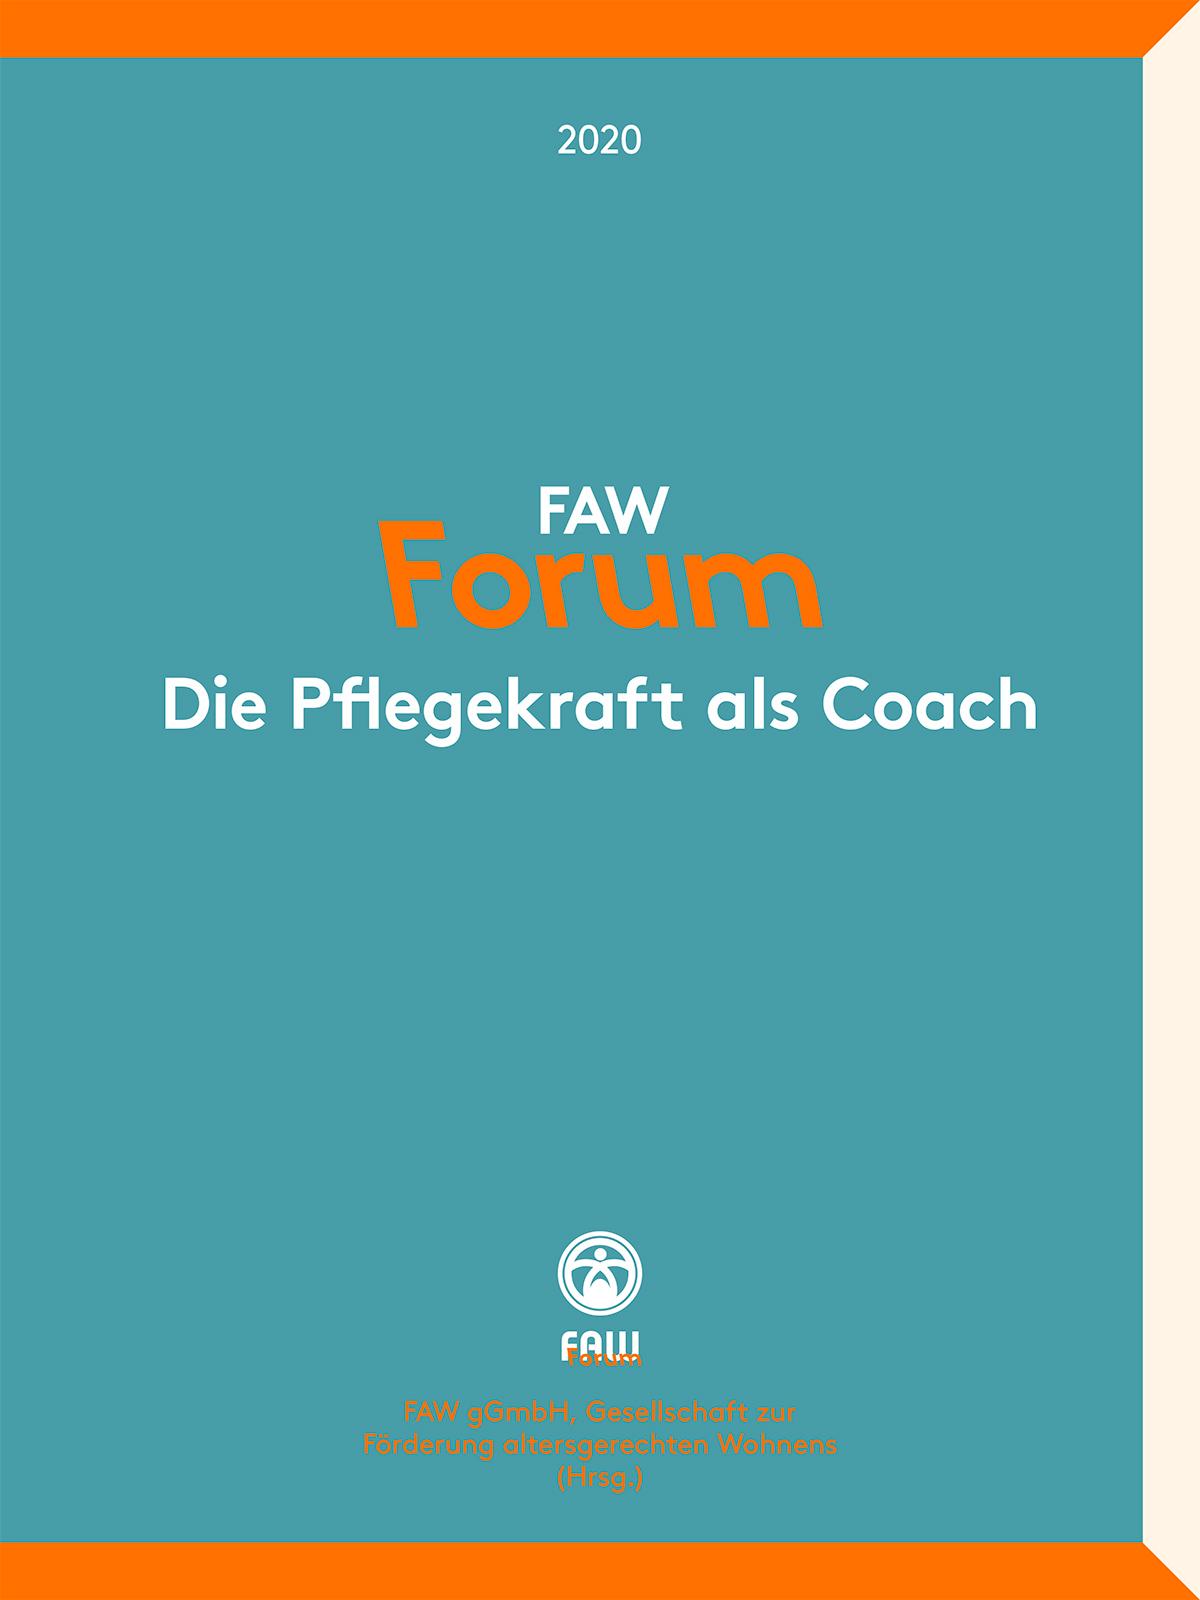 FAW Forum 2020